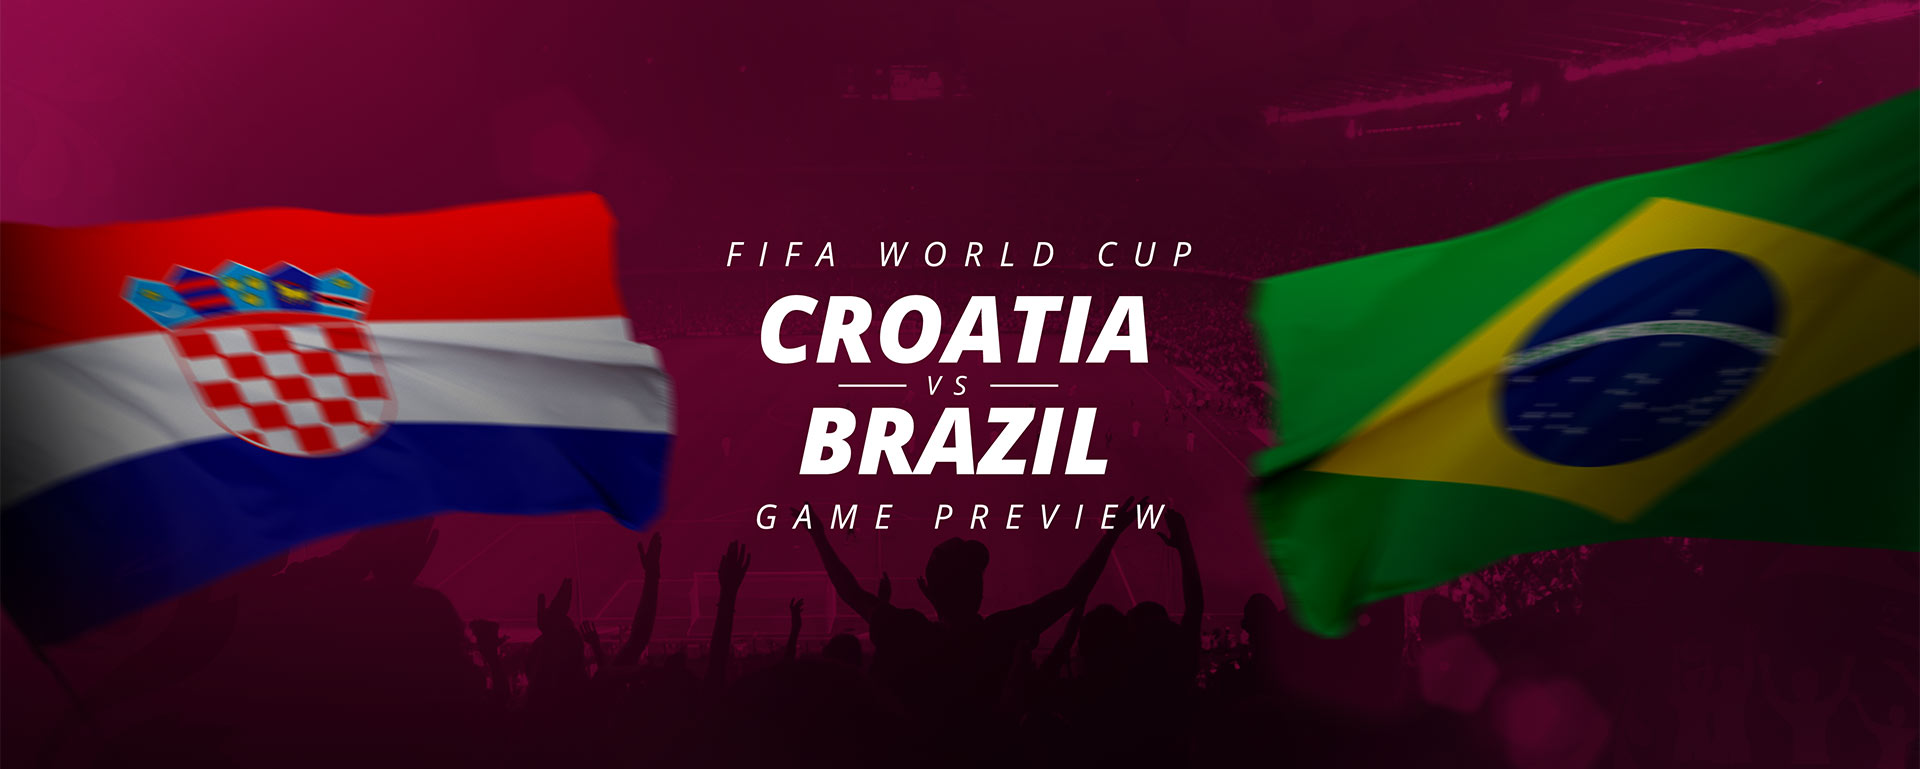 FIFA WORLD CUP: CROATIA V BRAZIL – GAME PREVIEW